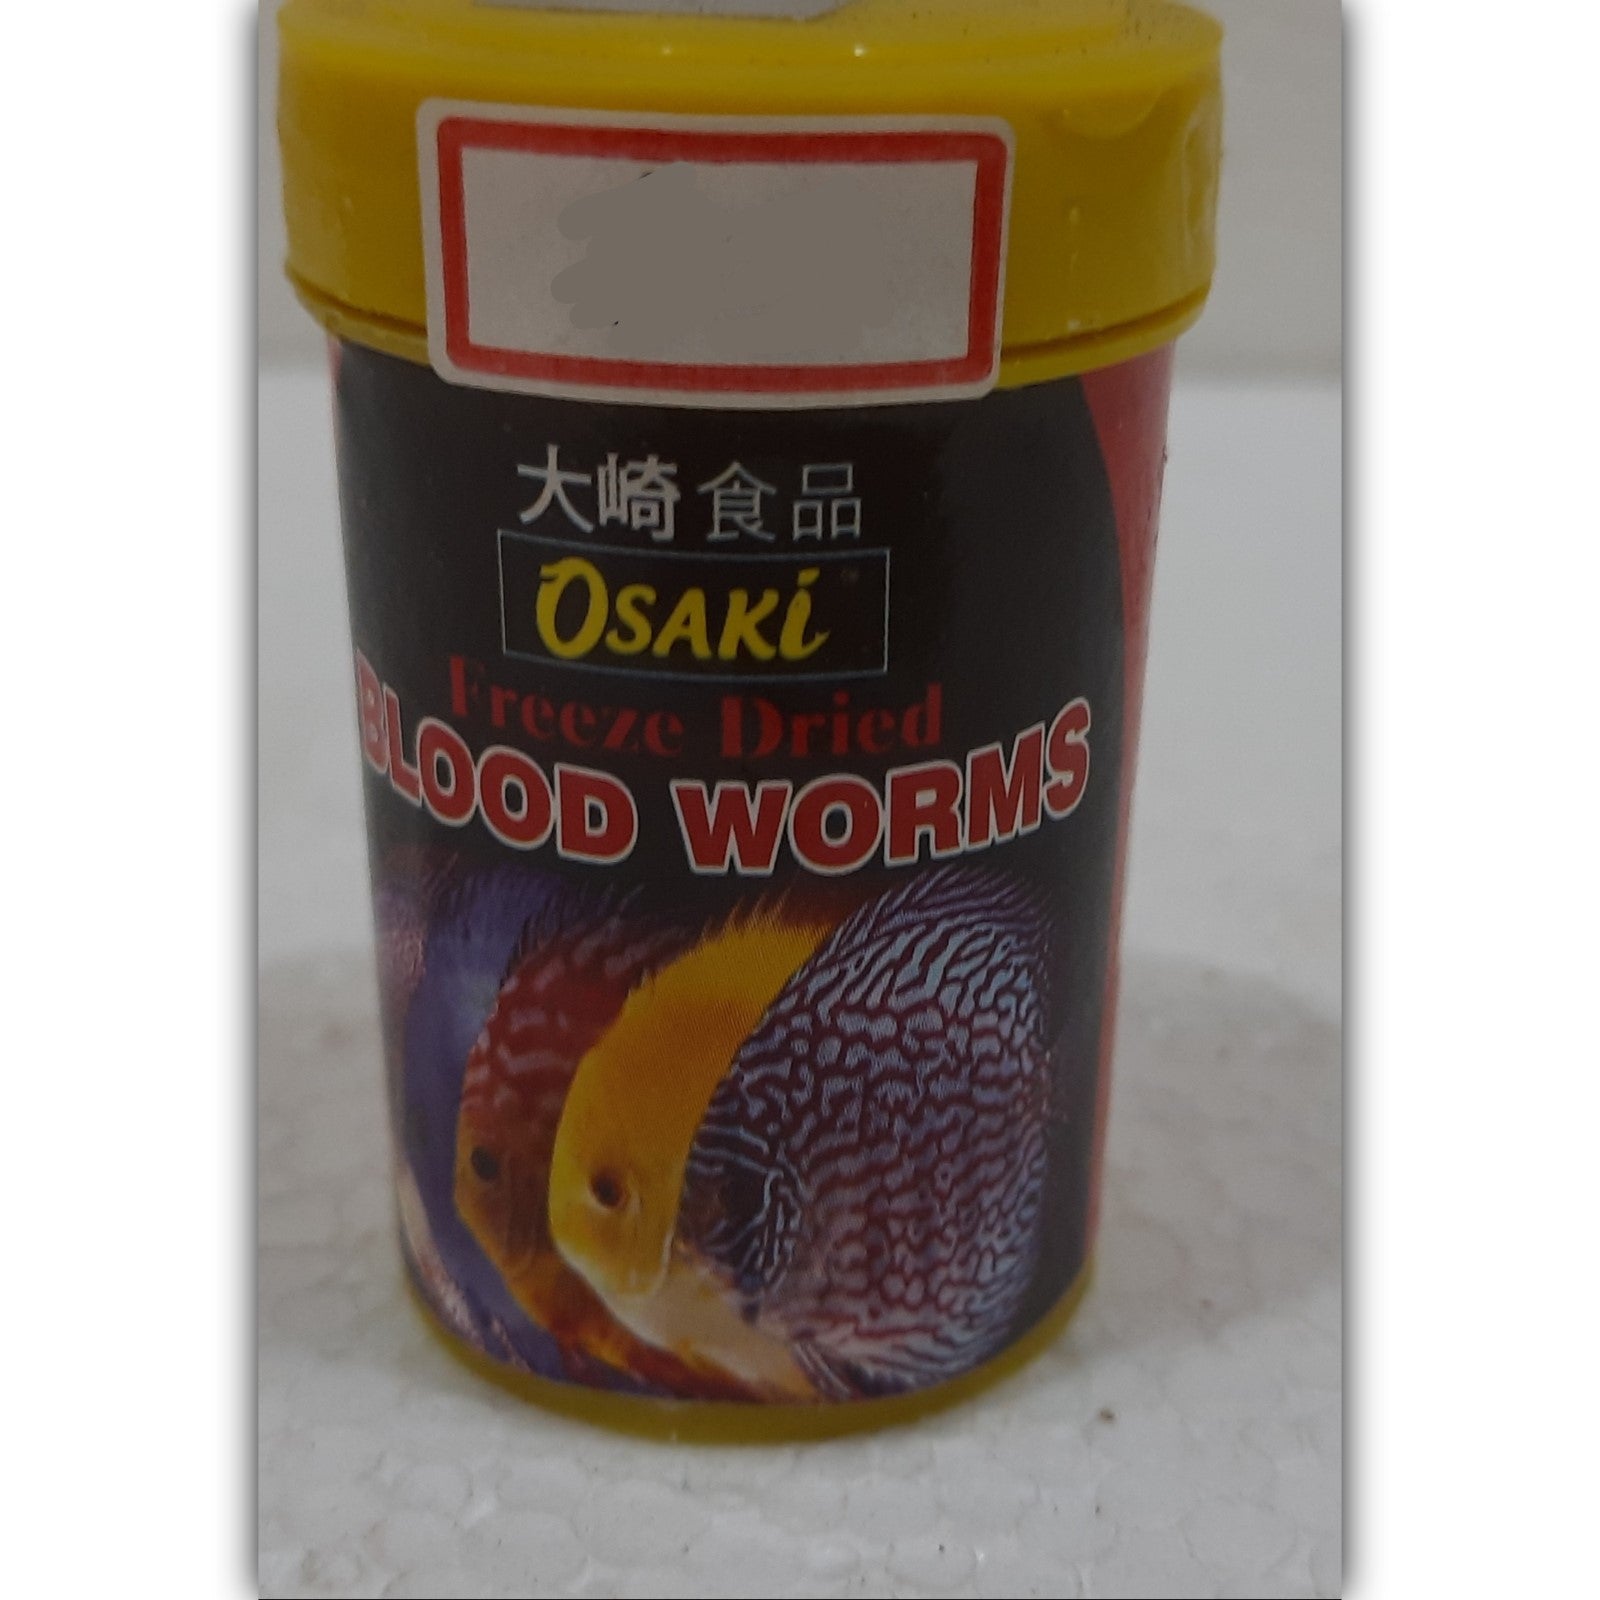 Blood Worms Osaki 5 g